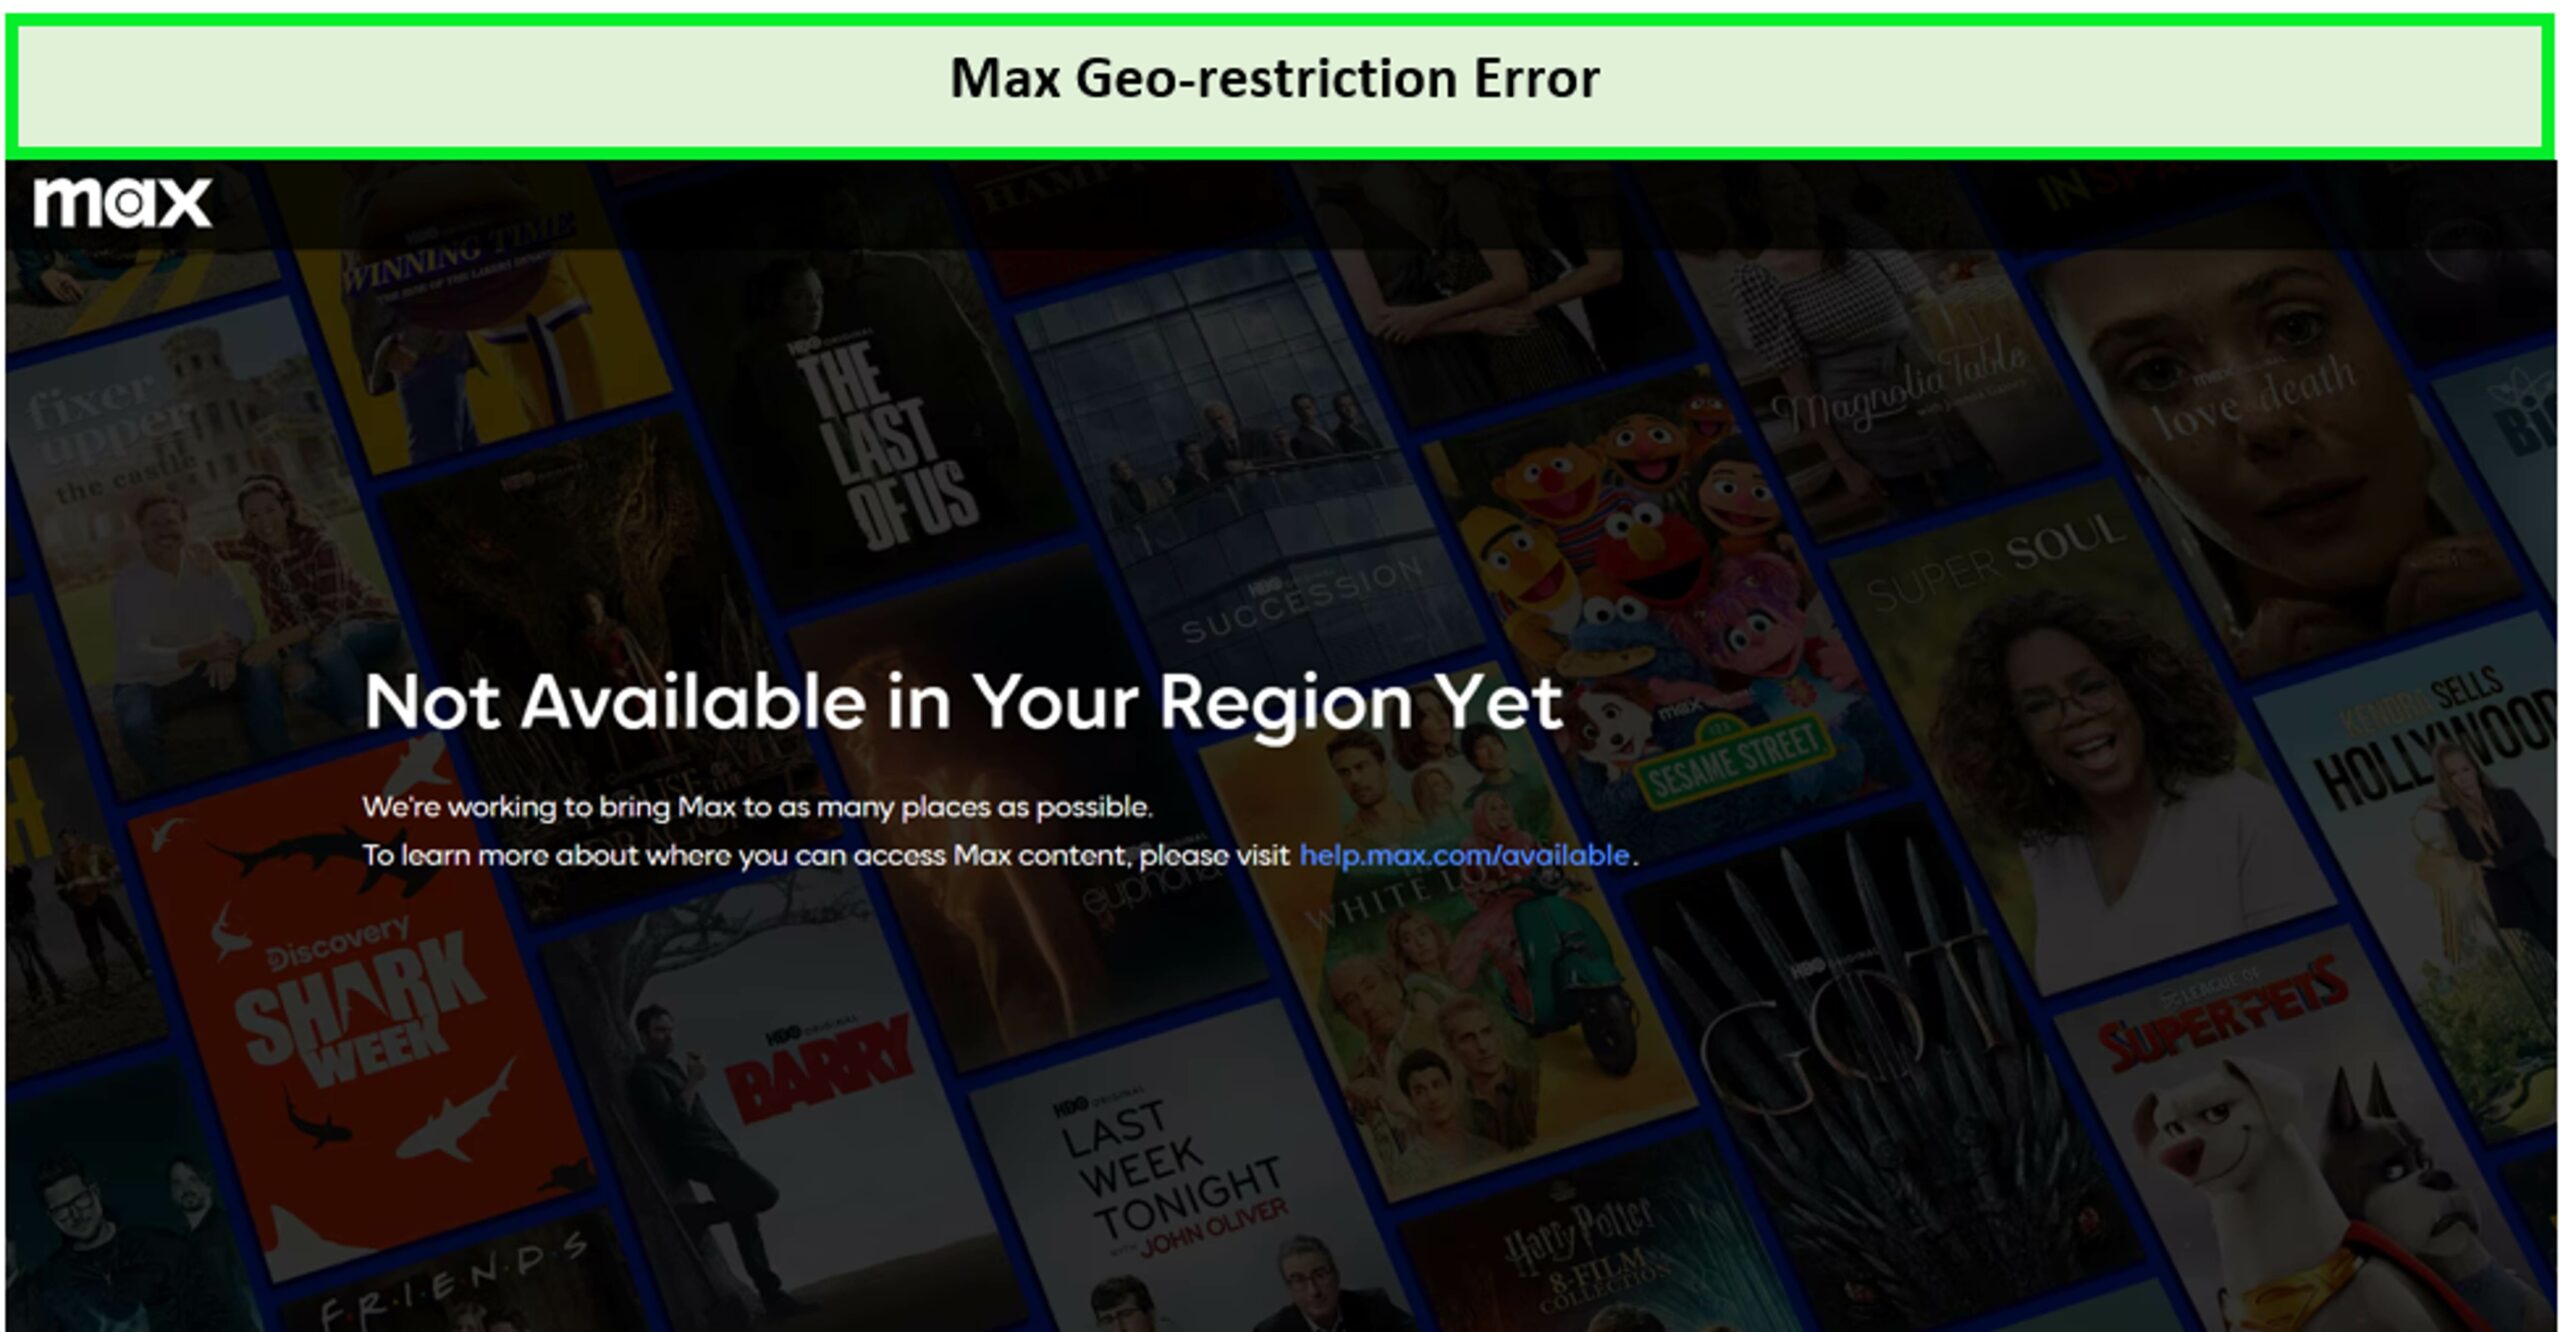 HBO-Max-geo-restriction-error-in-costa-rica